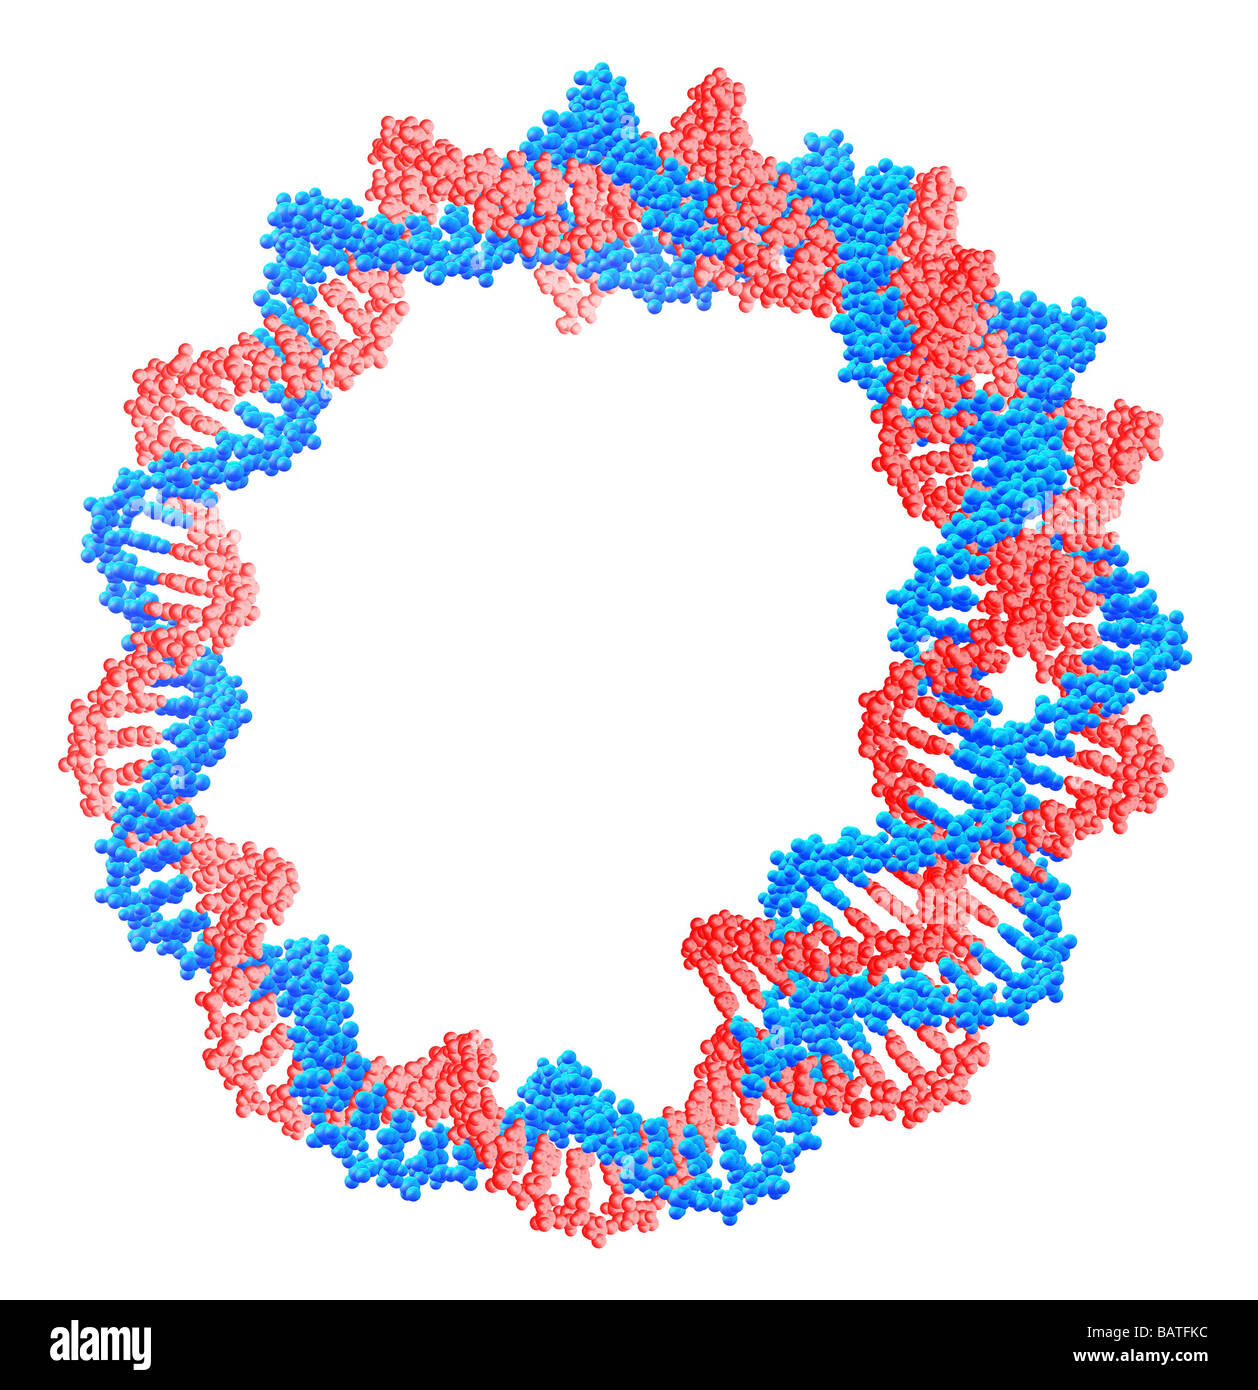 Kreisförmige DNA (Desoxyribonukleinsäure) Molekül, Computer-Grafik. Kreisförmige DNA hat keine enden, sondern besteht aus einer Ringstruktur. Stockfoto